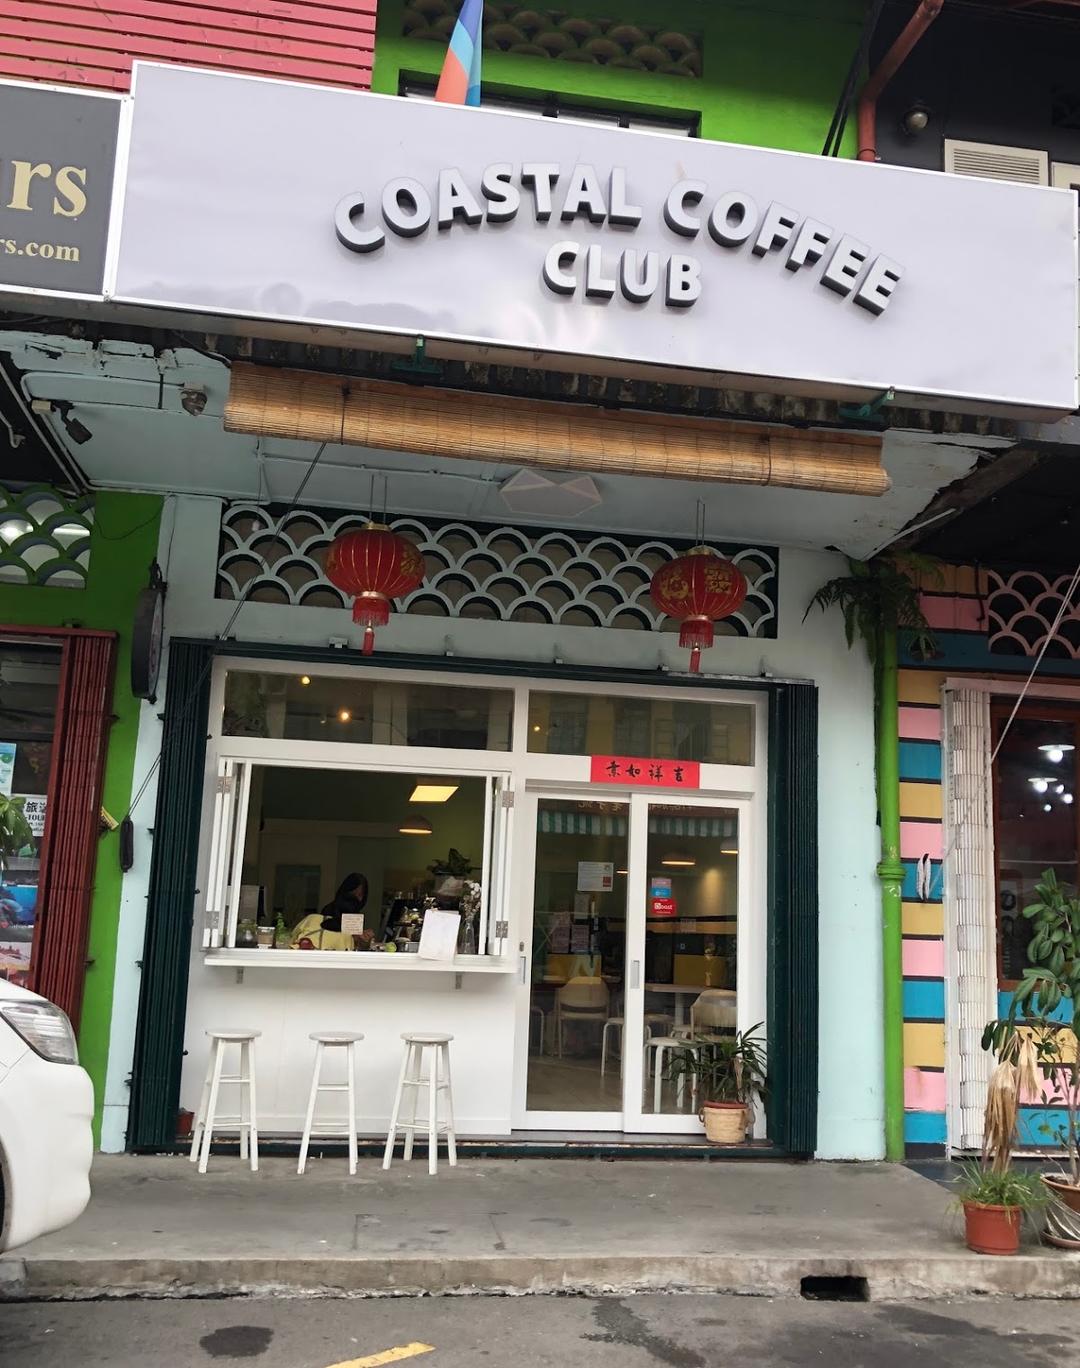 Photo of Coastal Coffee Club - Kota Kinabalu, Sabah, Malaysia